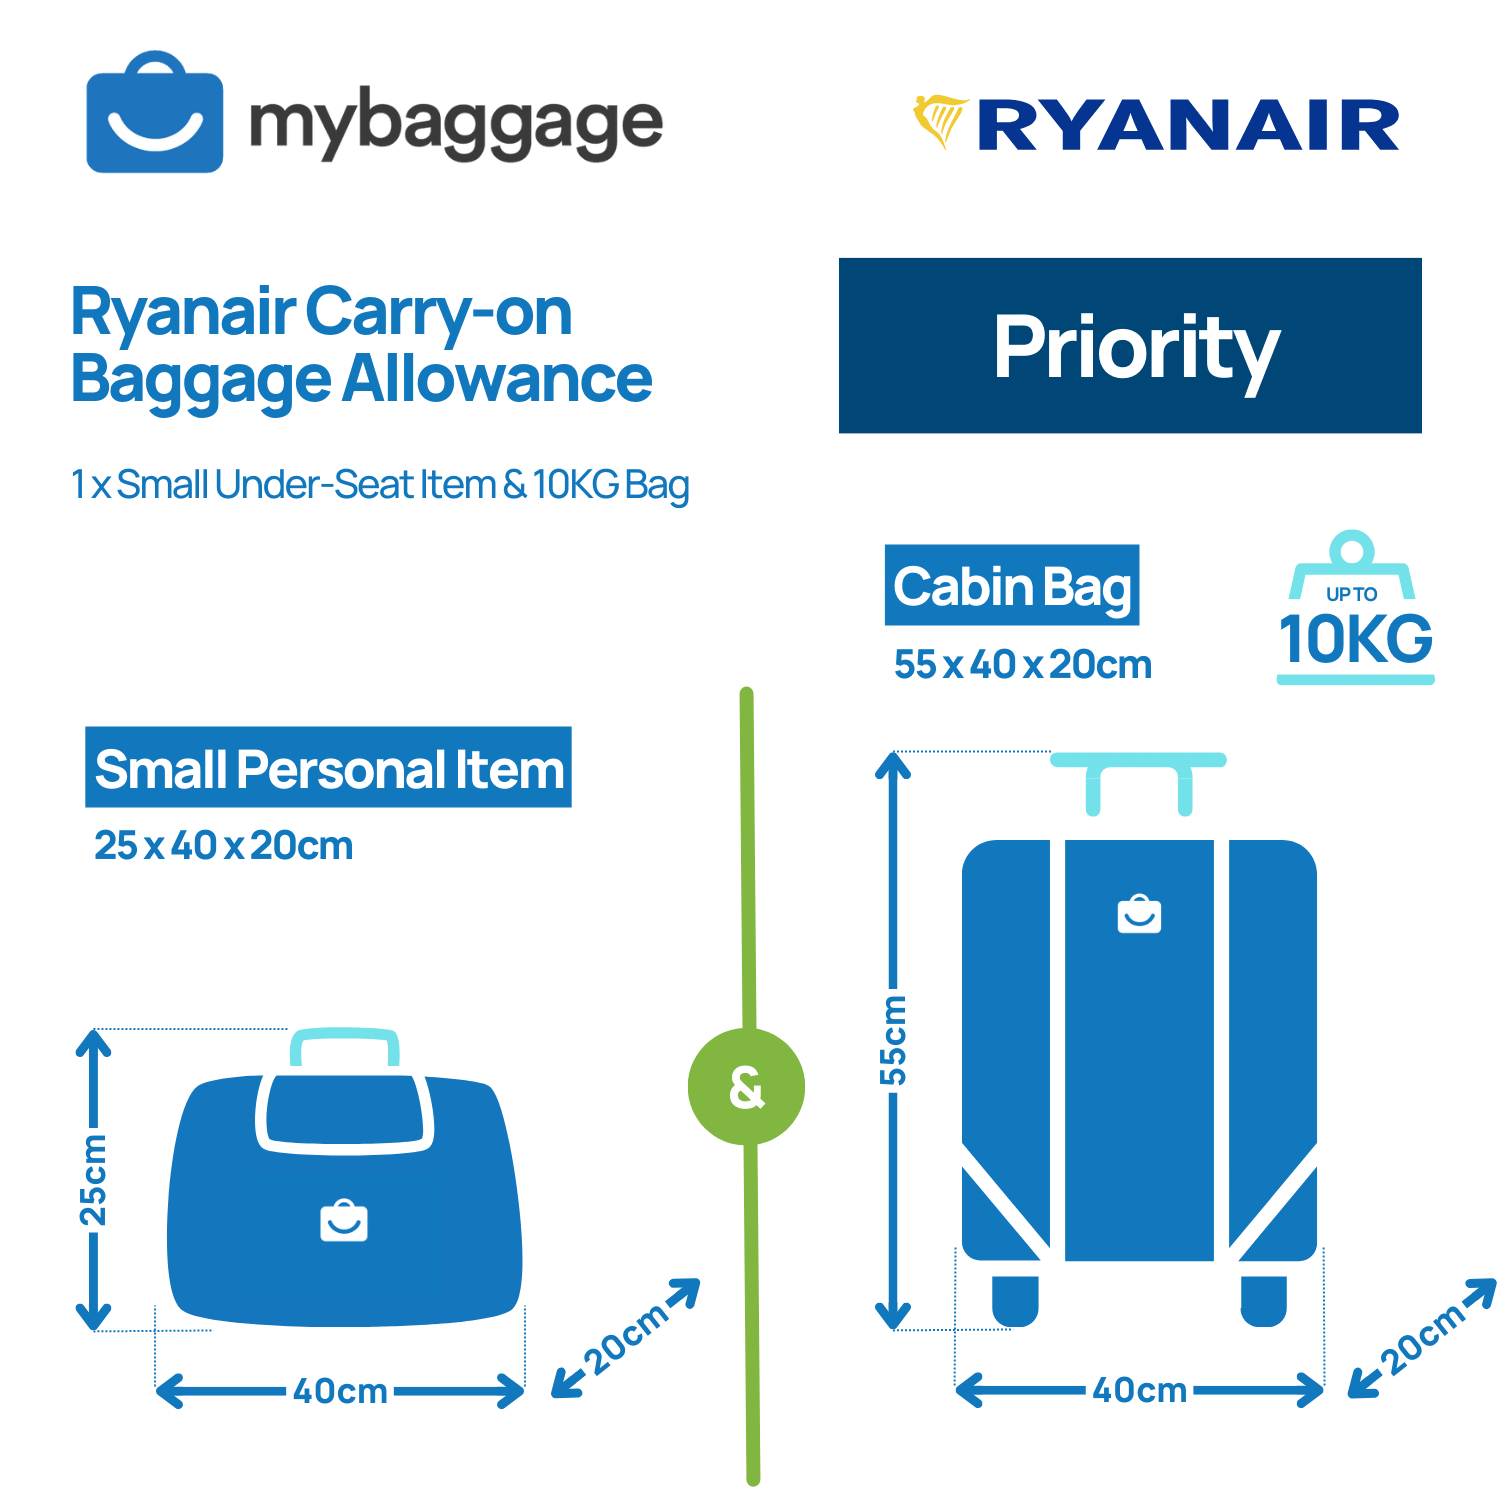 Ryanair Priority